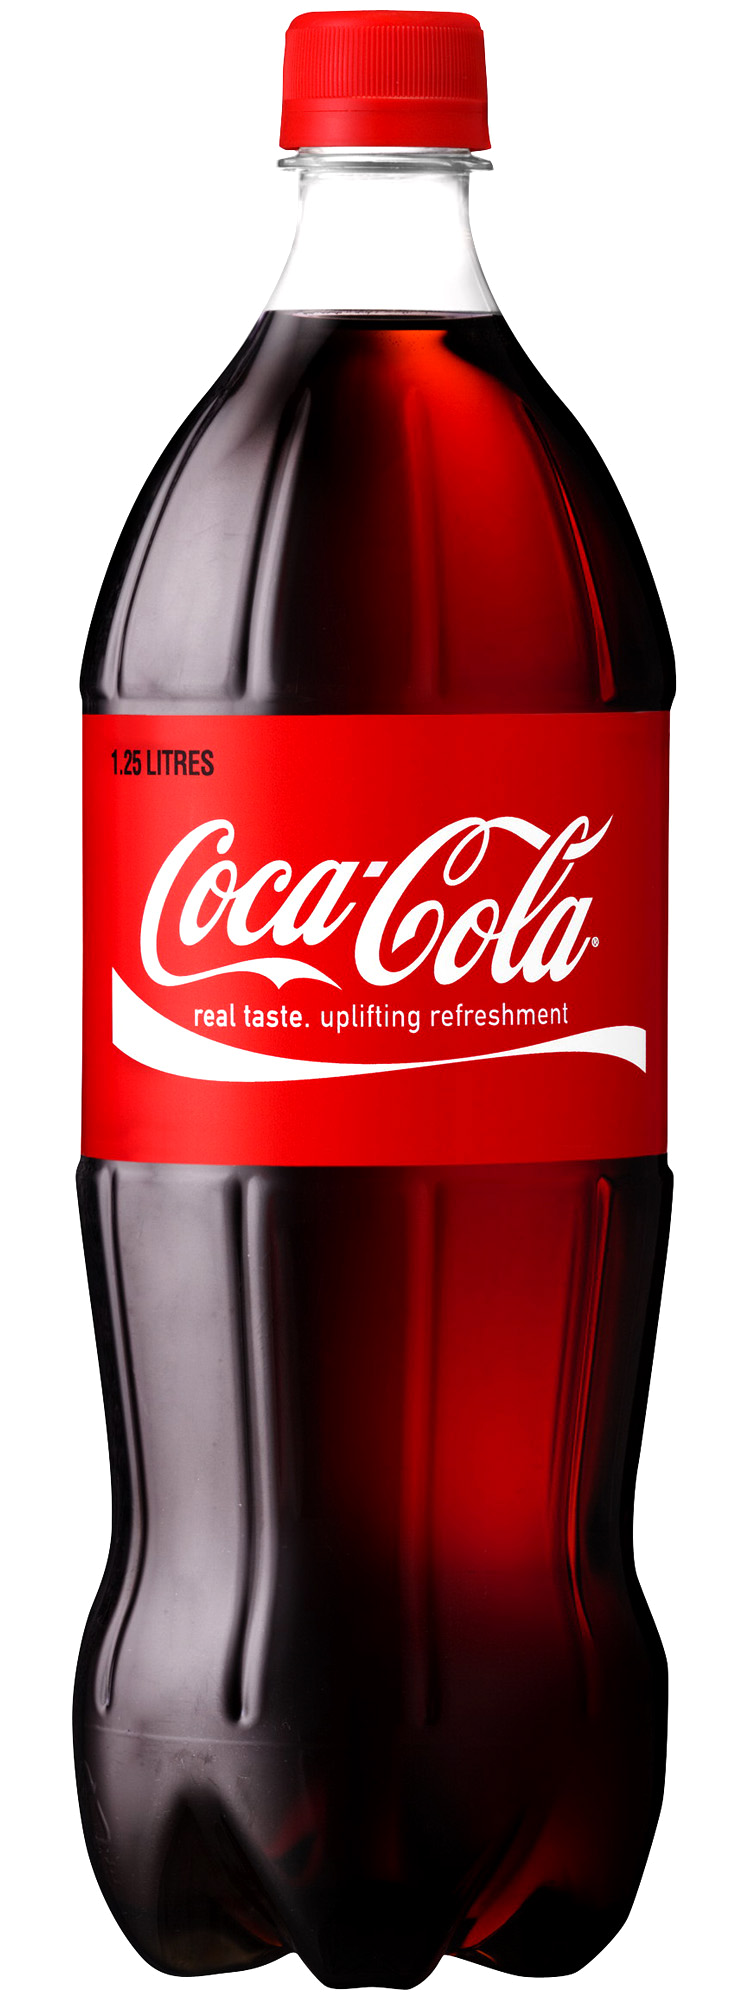 Coca Cola bottle PNG image download free 